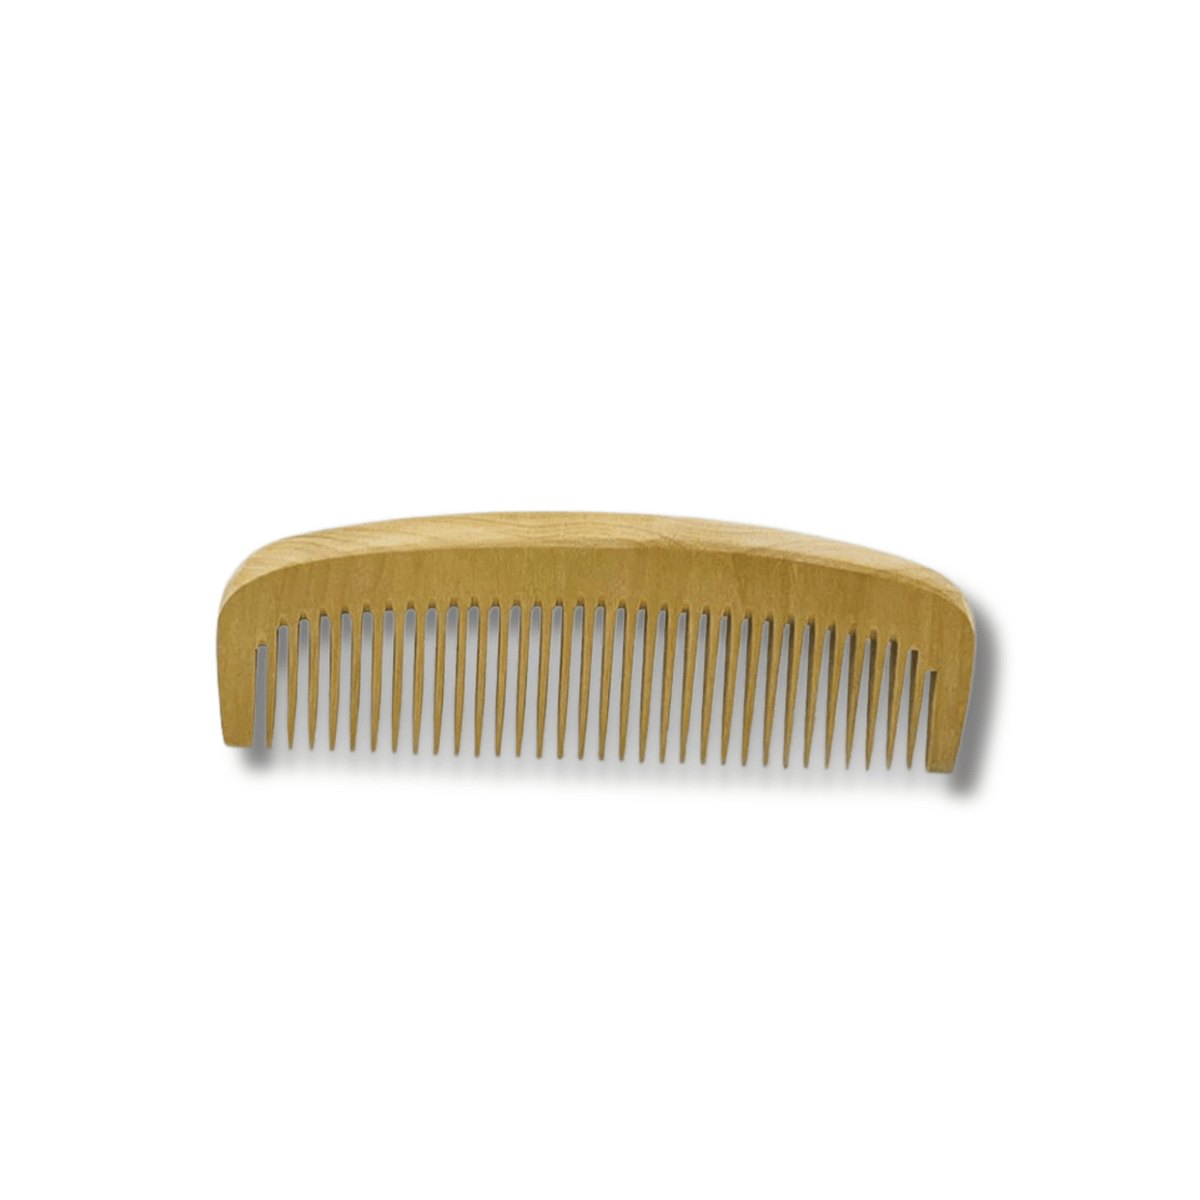 Primary Image of Akane Tsuge Boxwood Comb 4.10 inch